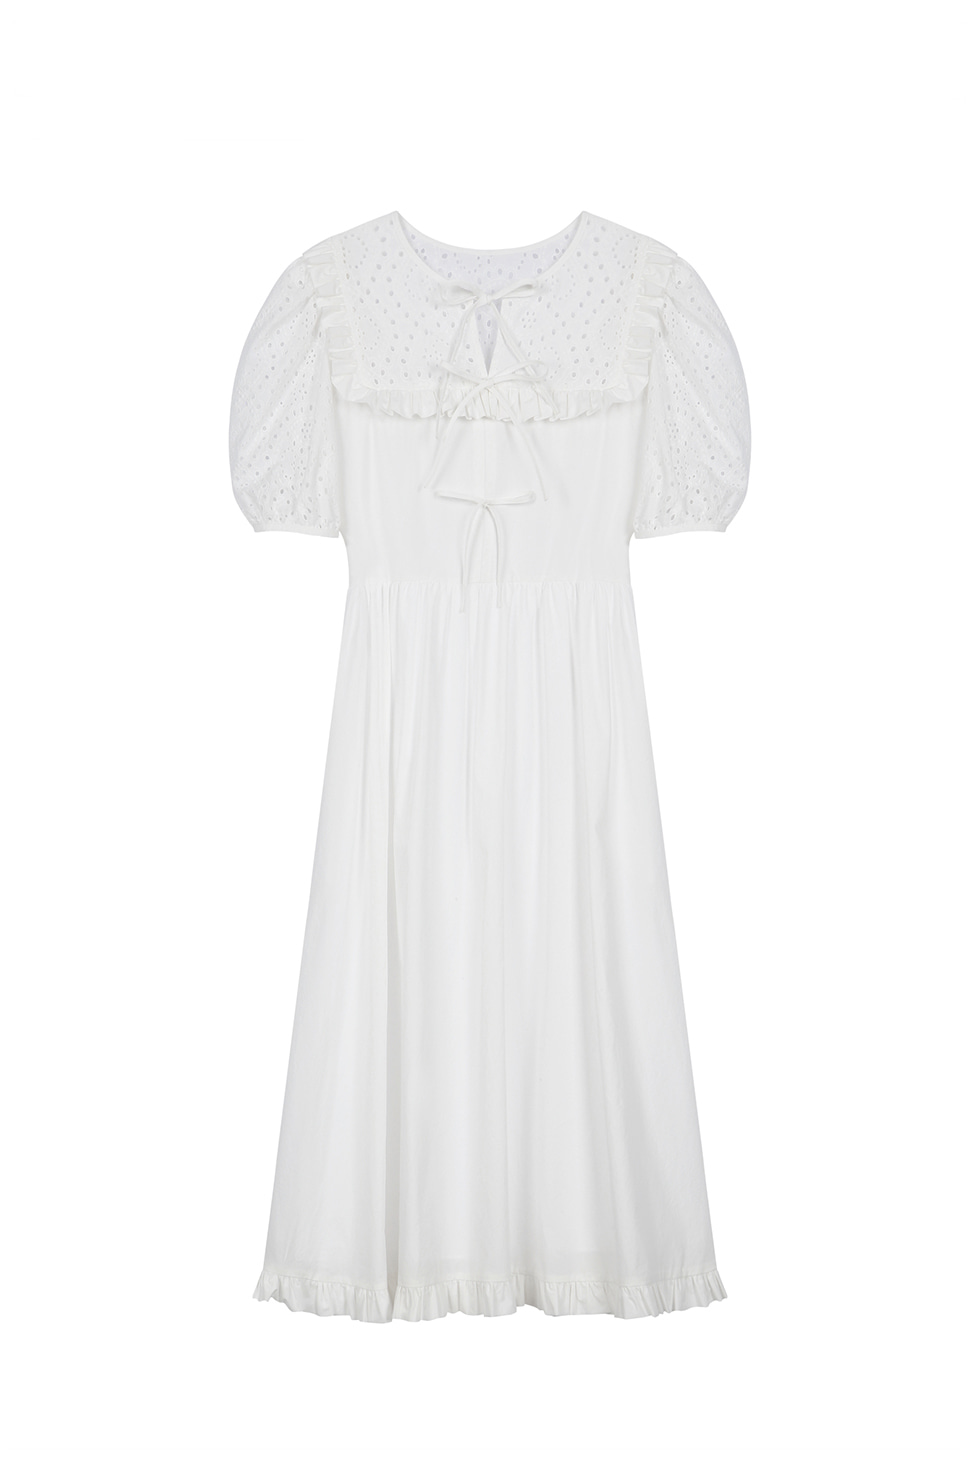 COTTON BROIDERY DRESS - WHITE